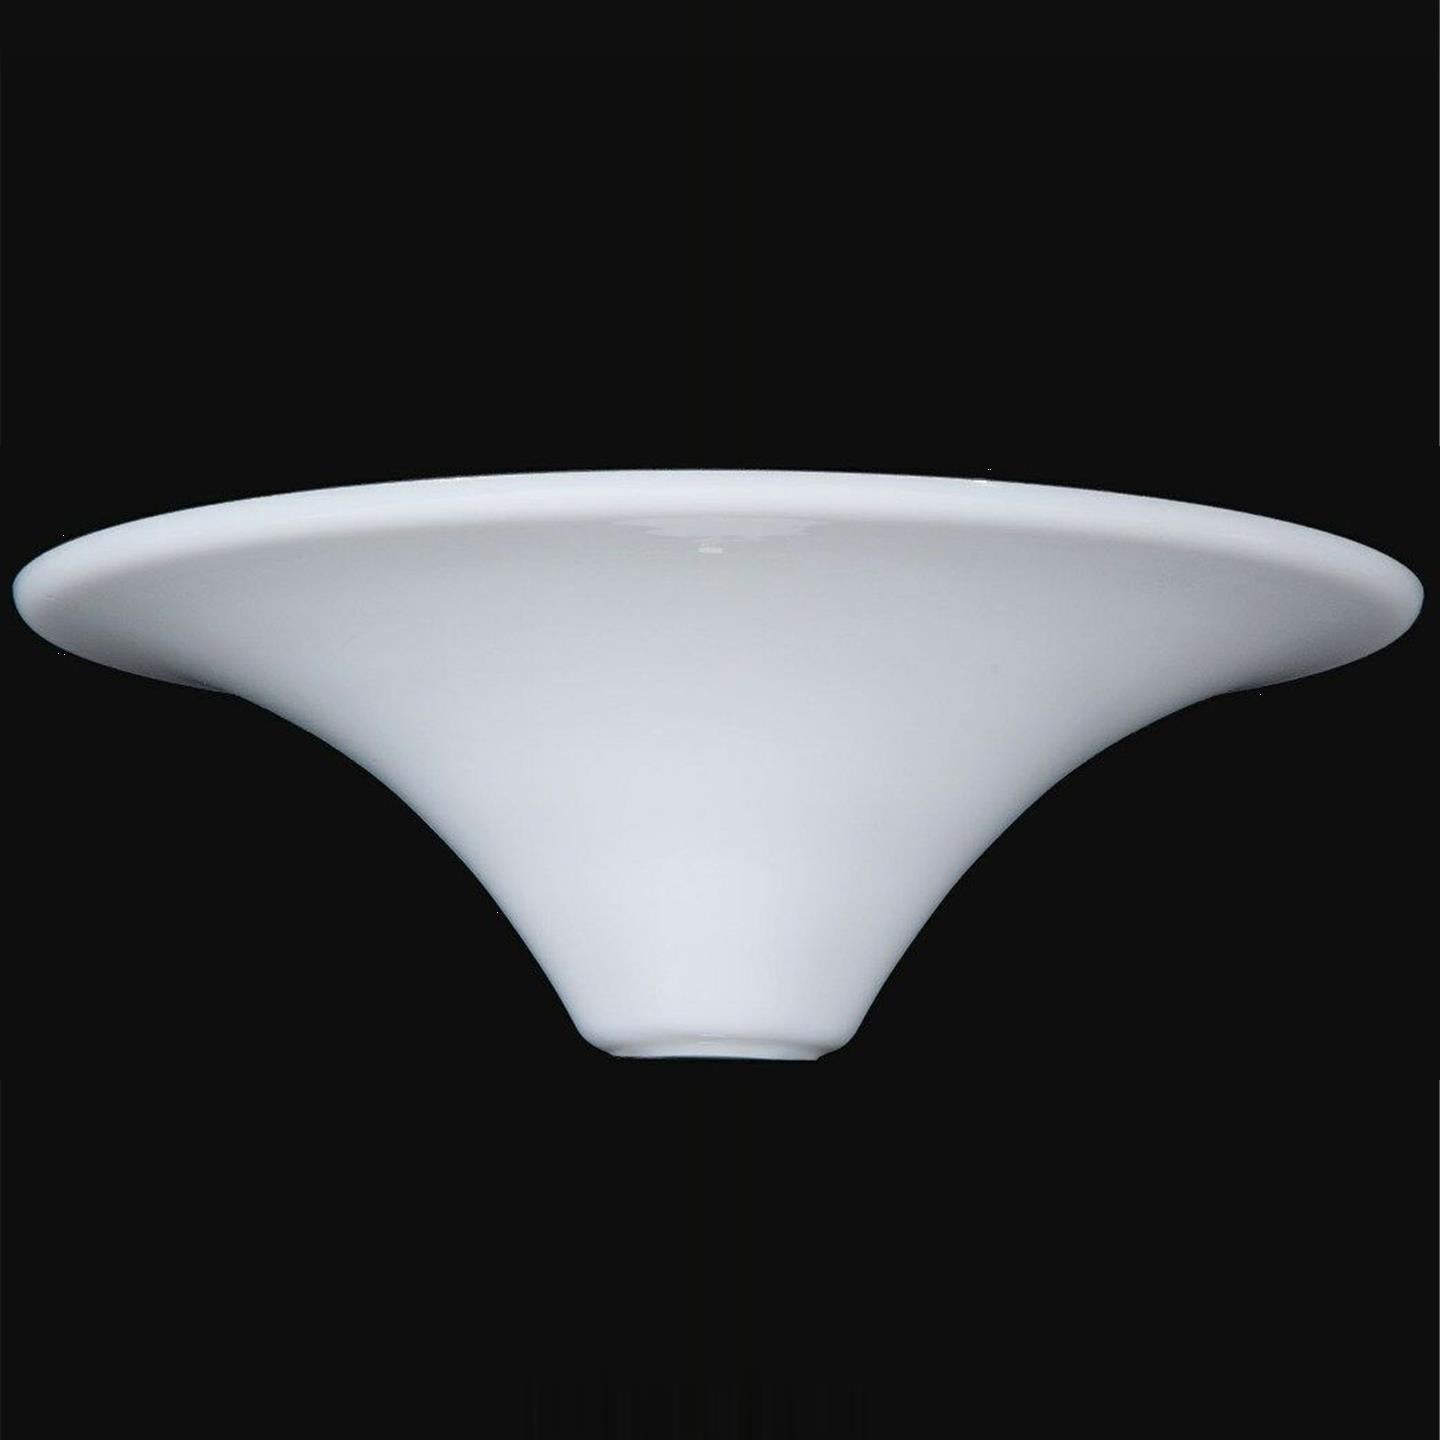 Stiffel Torchiere Shade White Glass 15, Stiffel Floor Lamp Shades Replacement